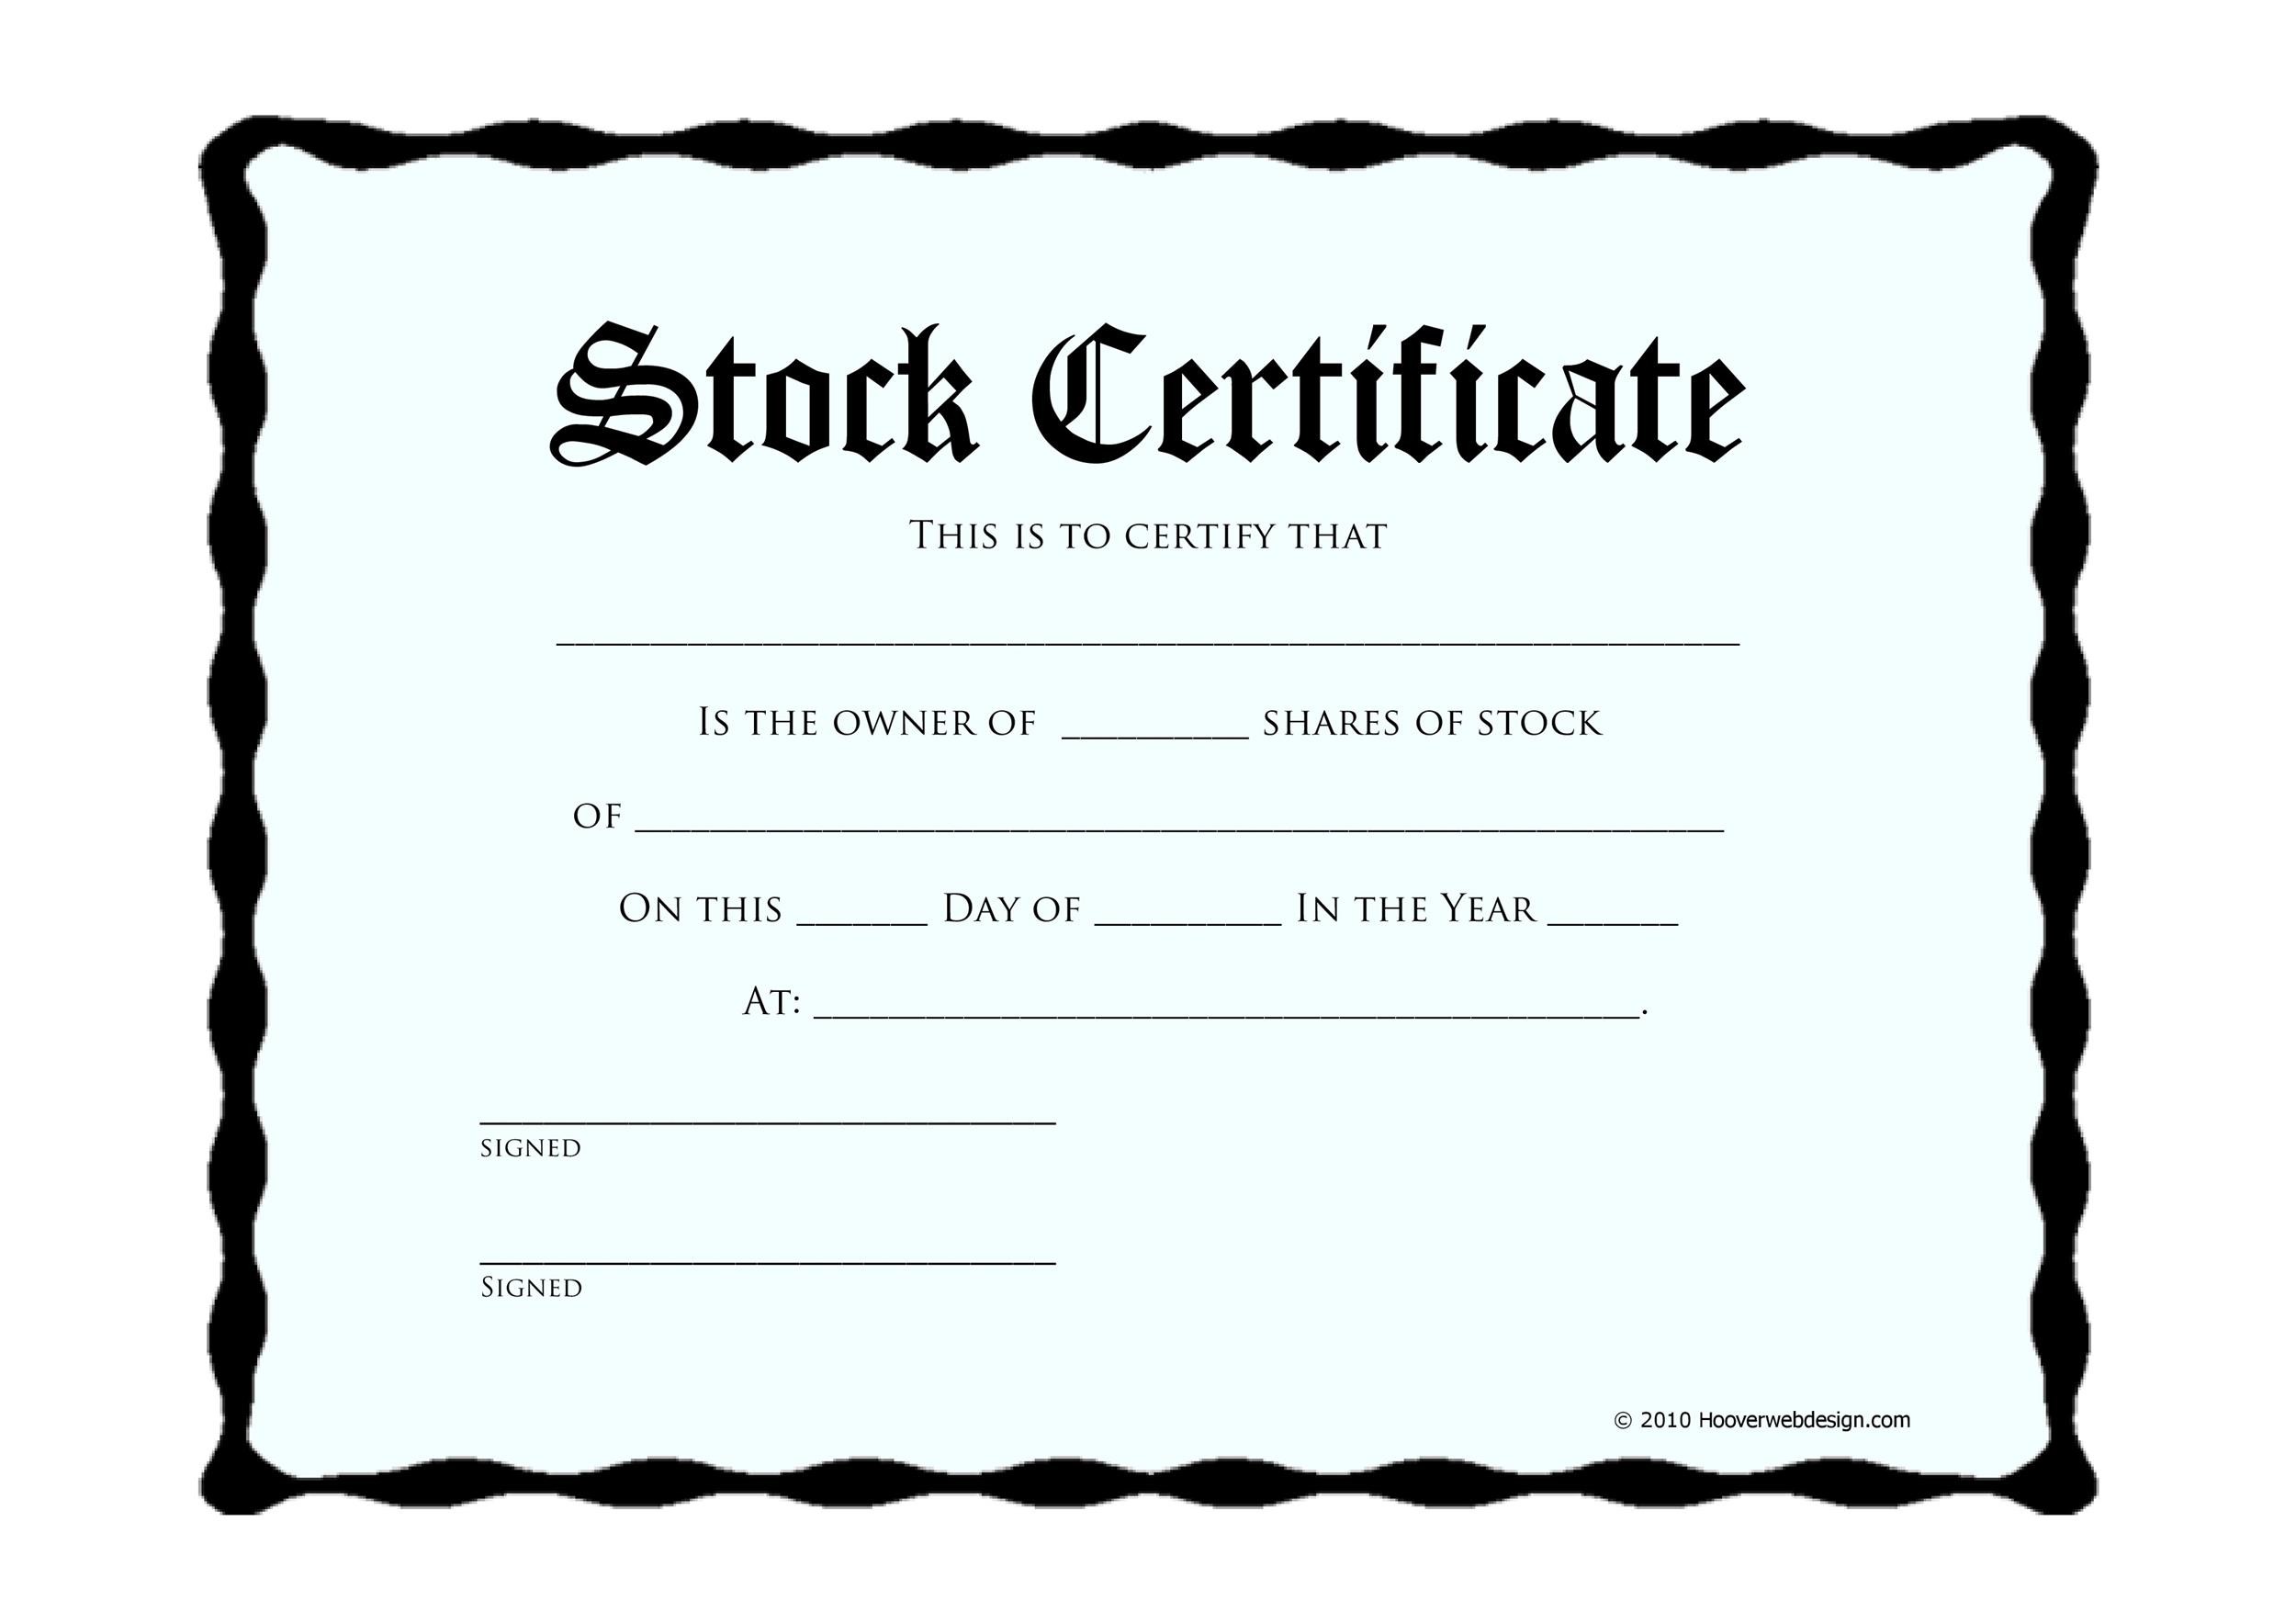 40 Free Stock Certificate Templates Word Pdf ᐅ Templatelab